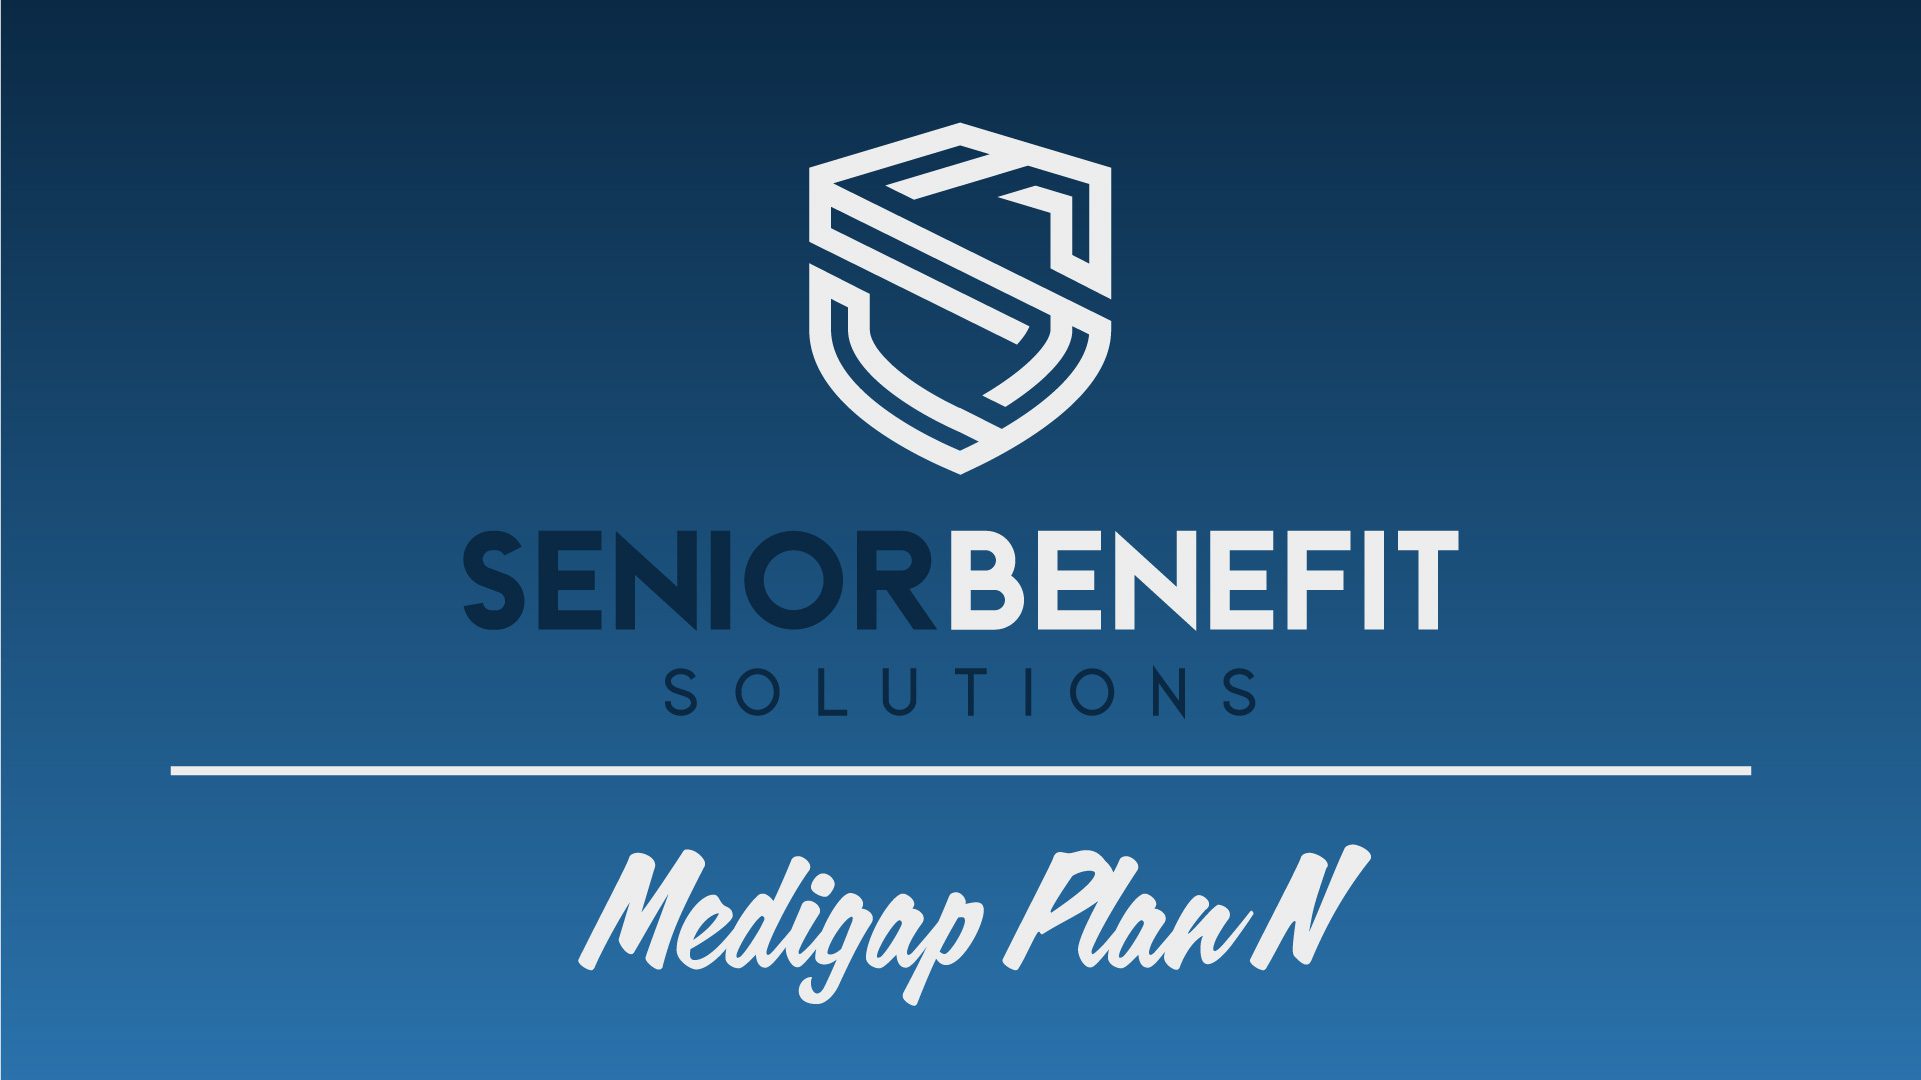 Senior Benefit Solutions; Medigap Plan N